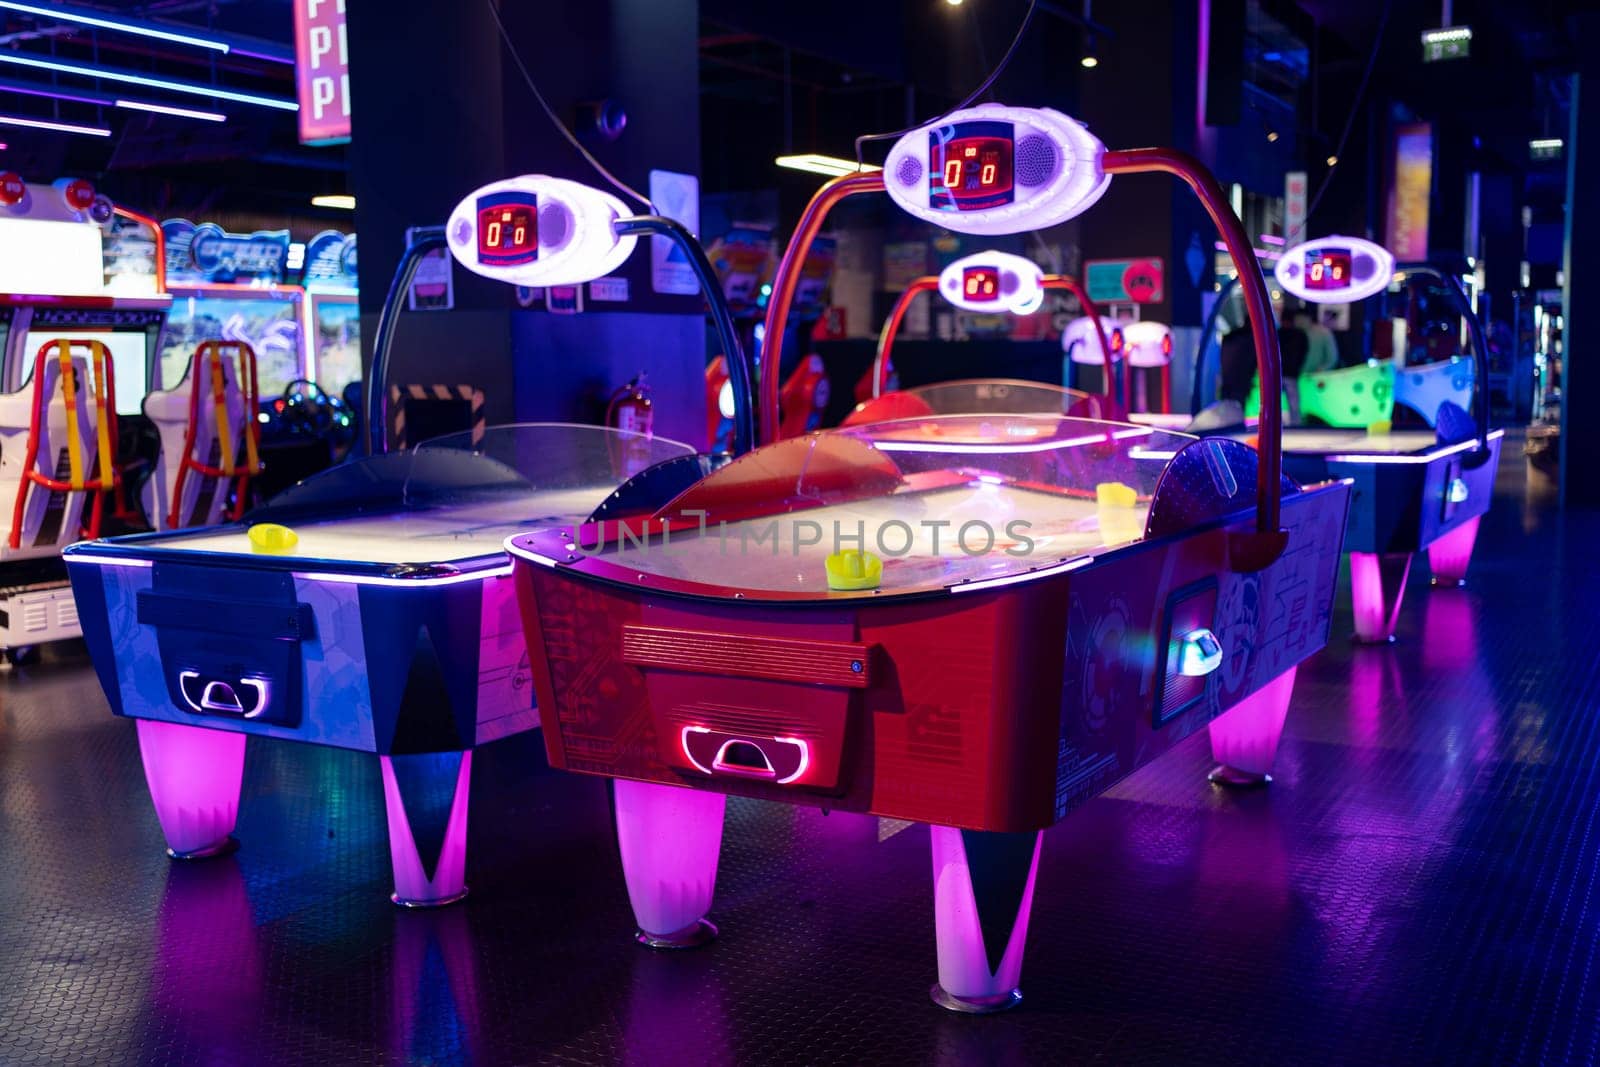 Air hockey tables illuminated neon light gaming arcade at night by andreonegin